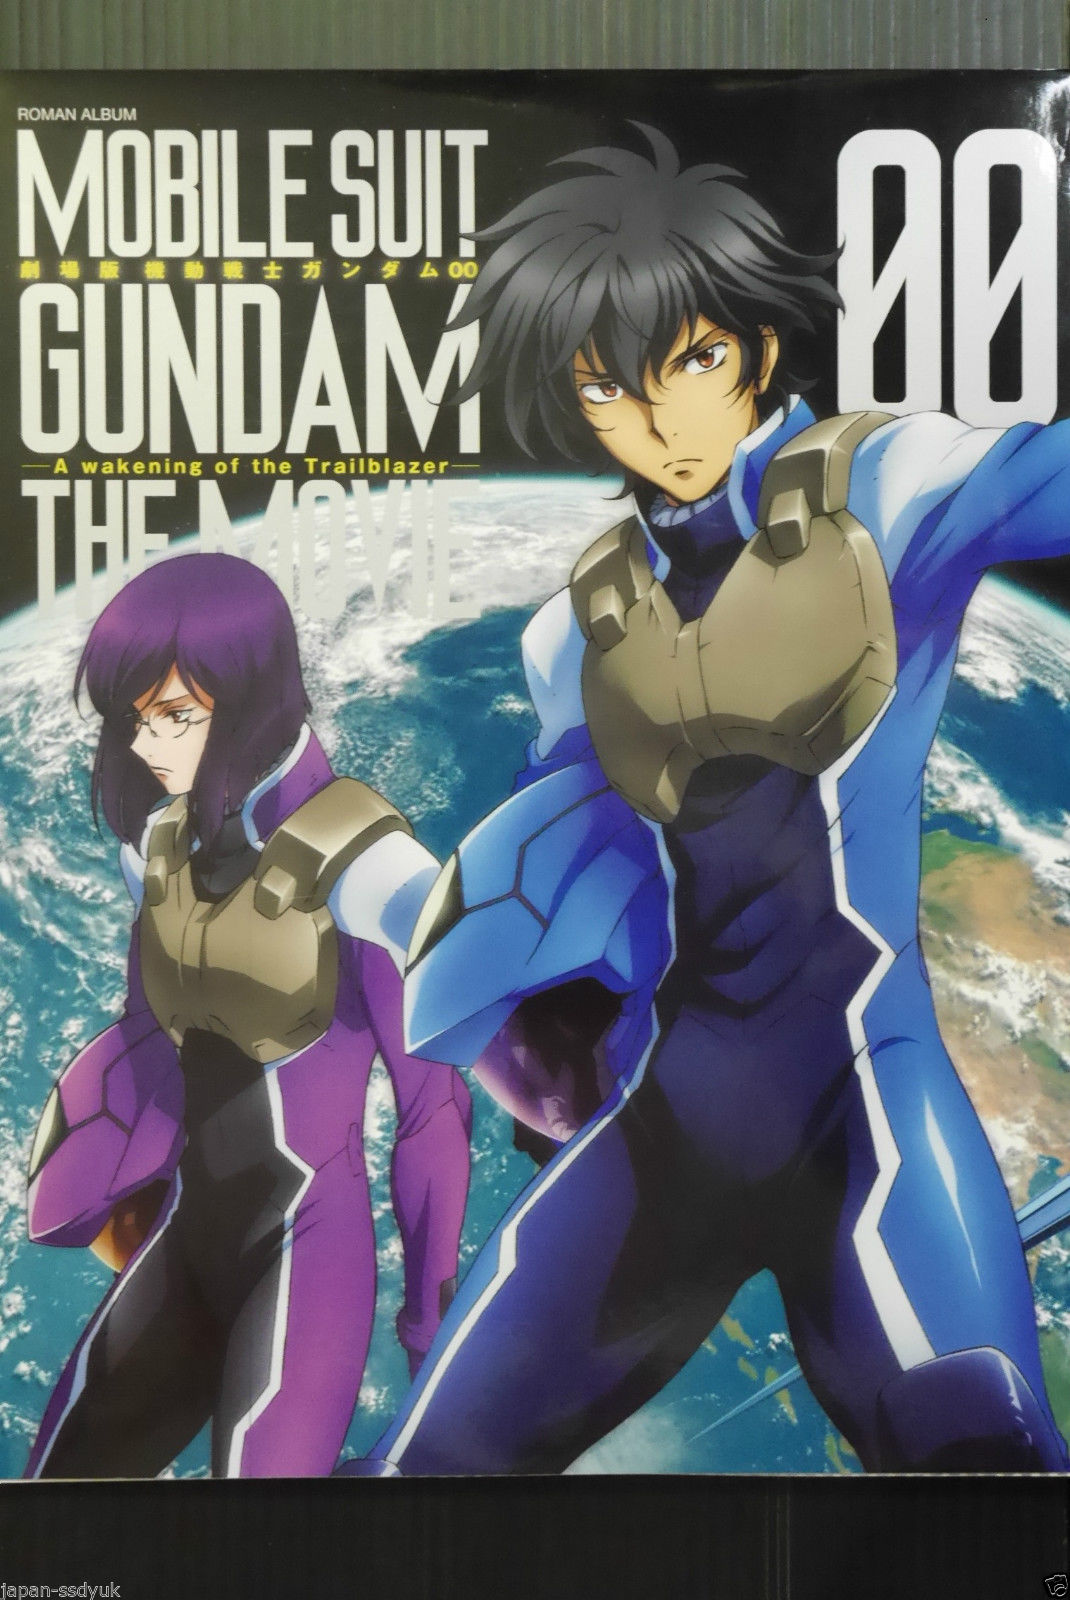 Gundam 00 the Movie: Awakening of the Trailblazer: Roman Album 